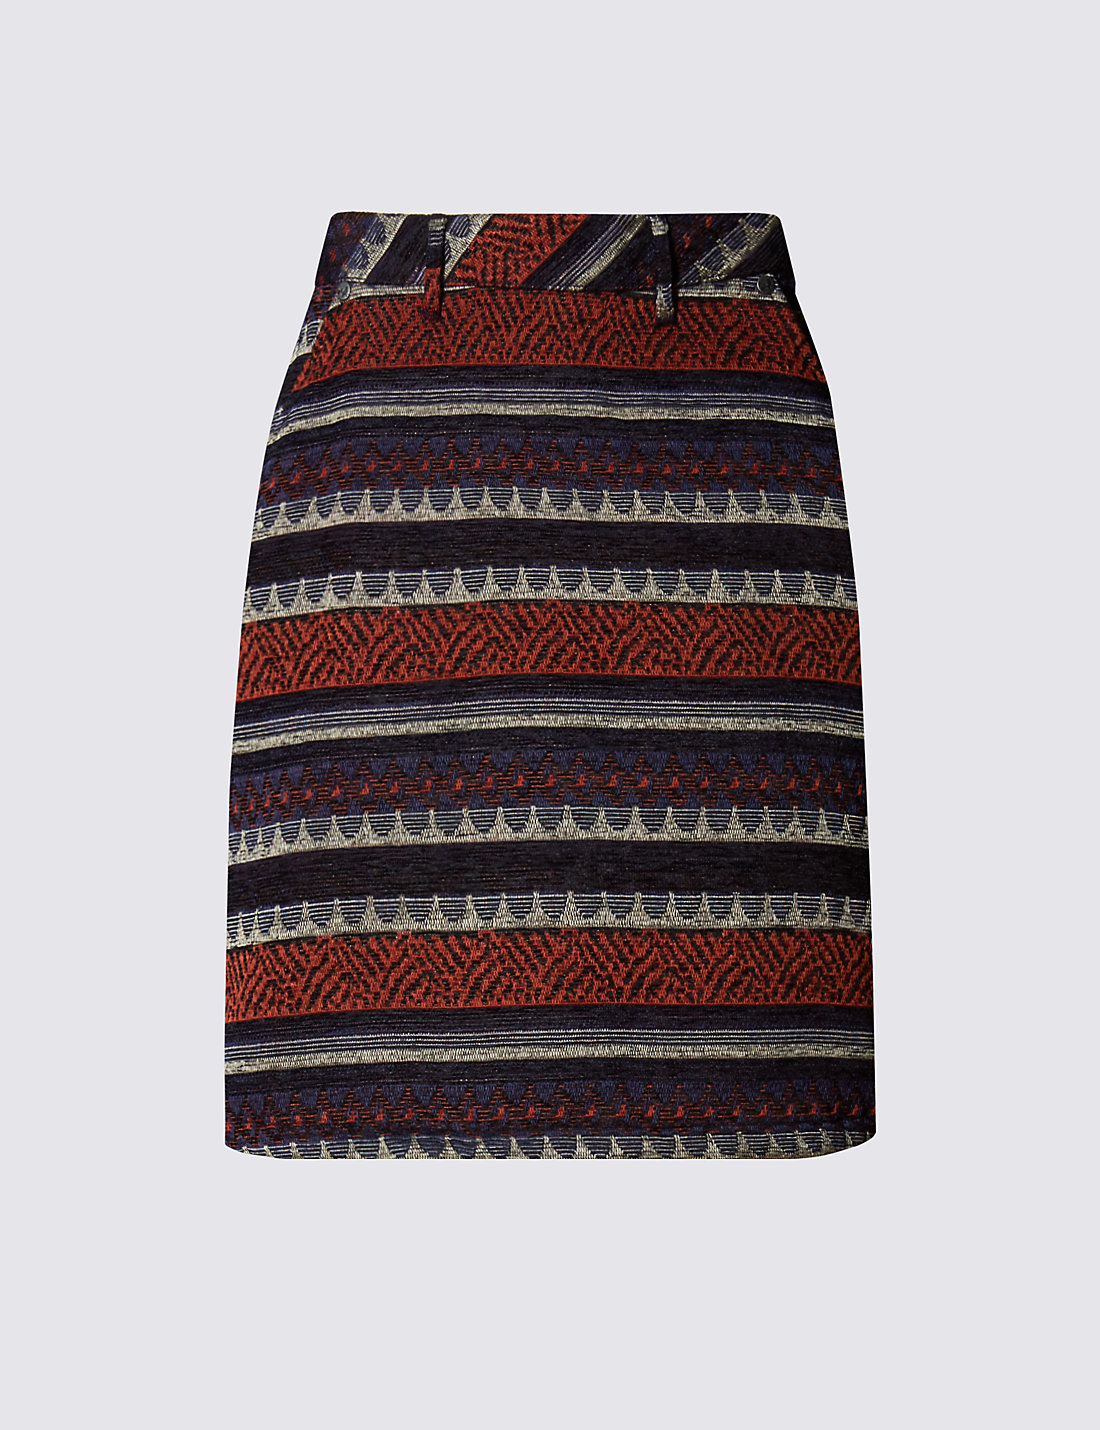 Jacquard A-Line Skirt